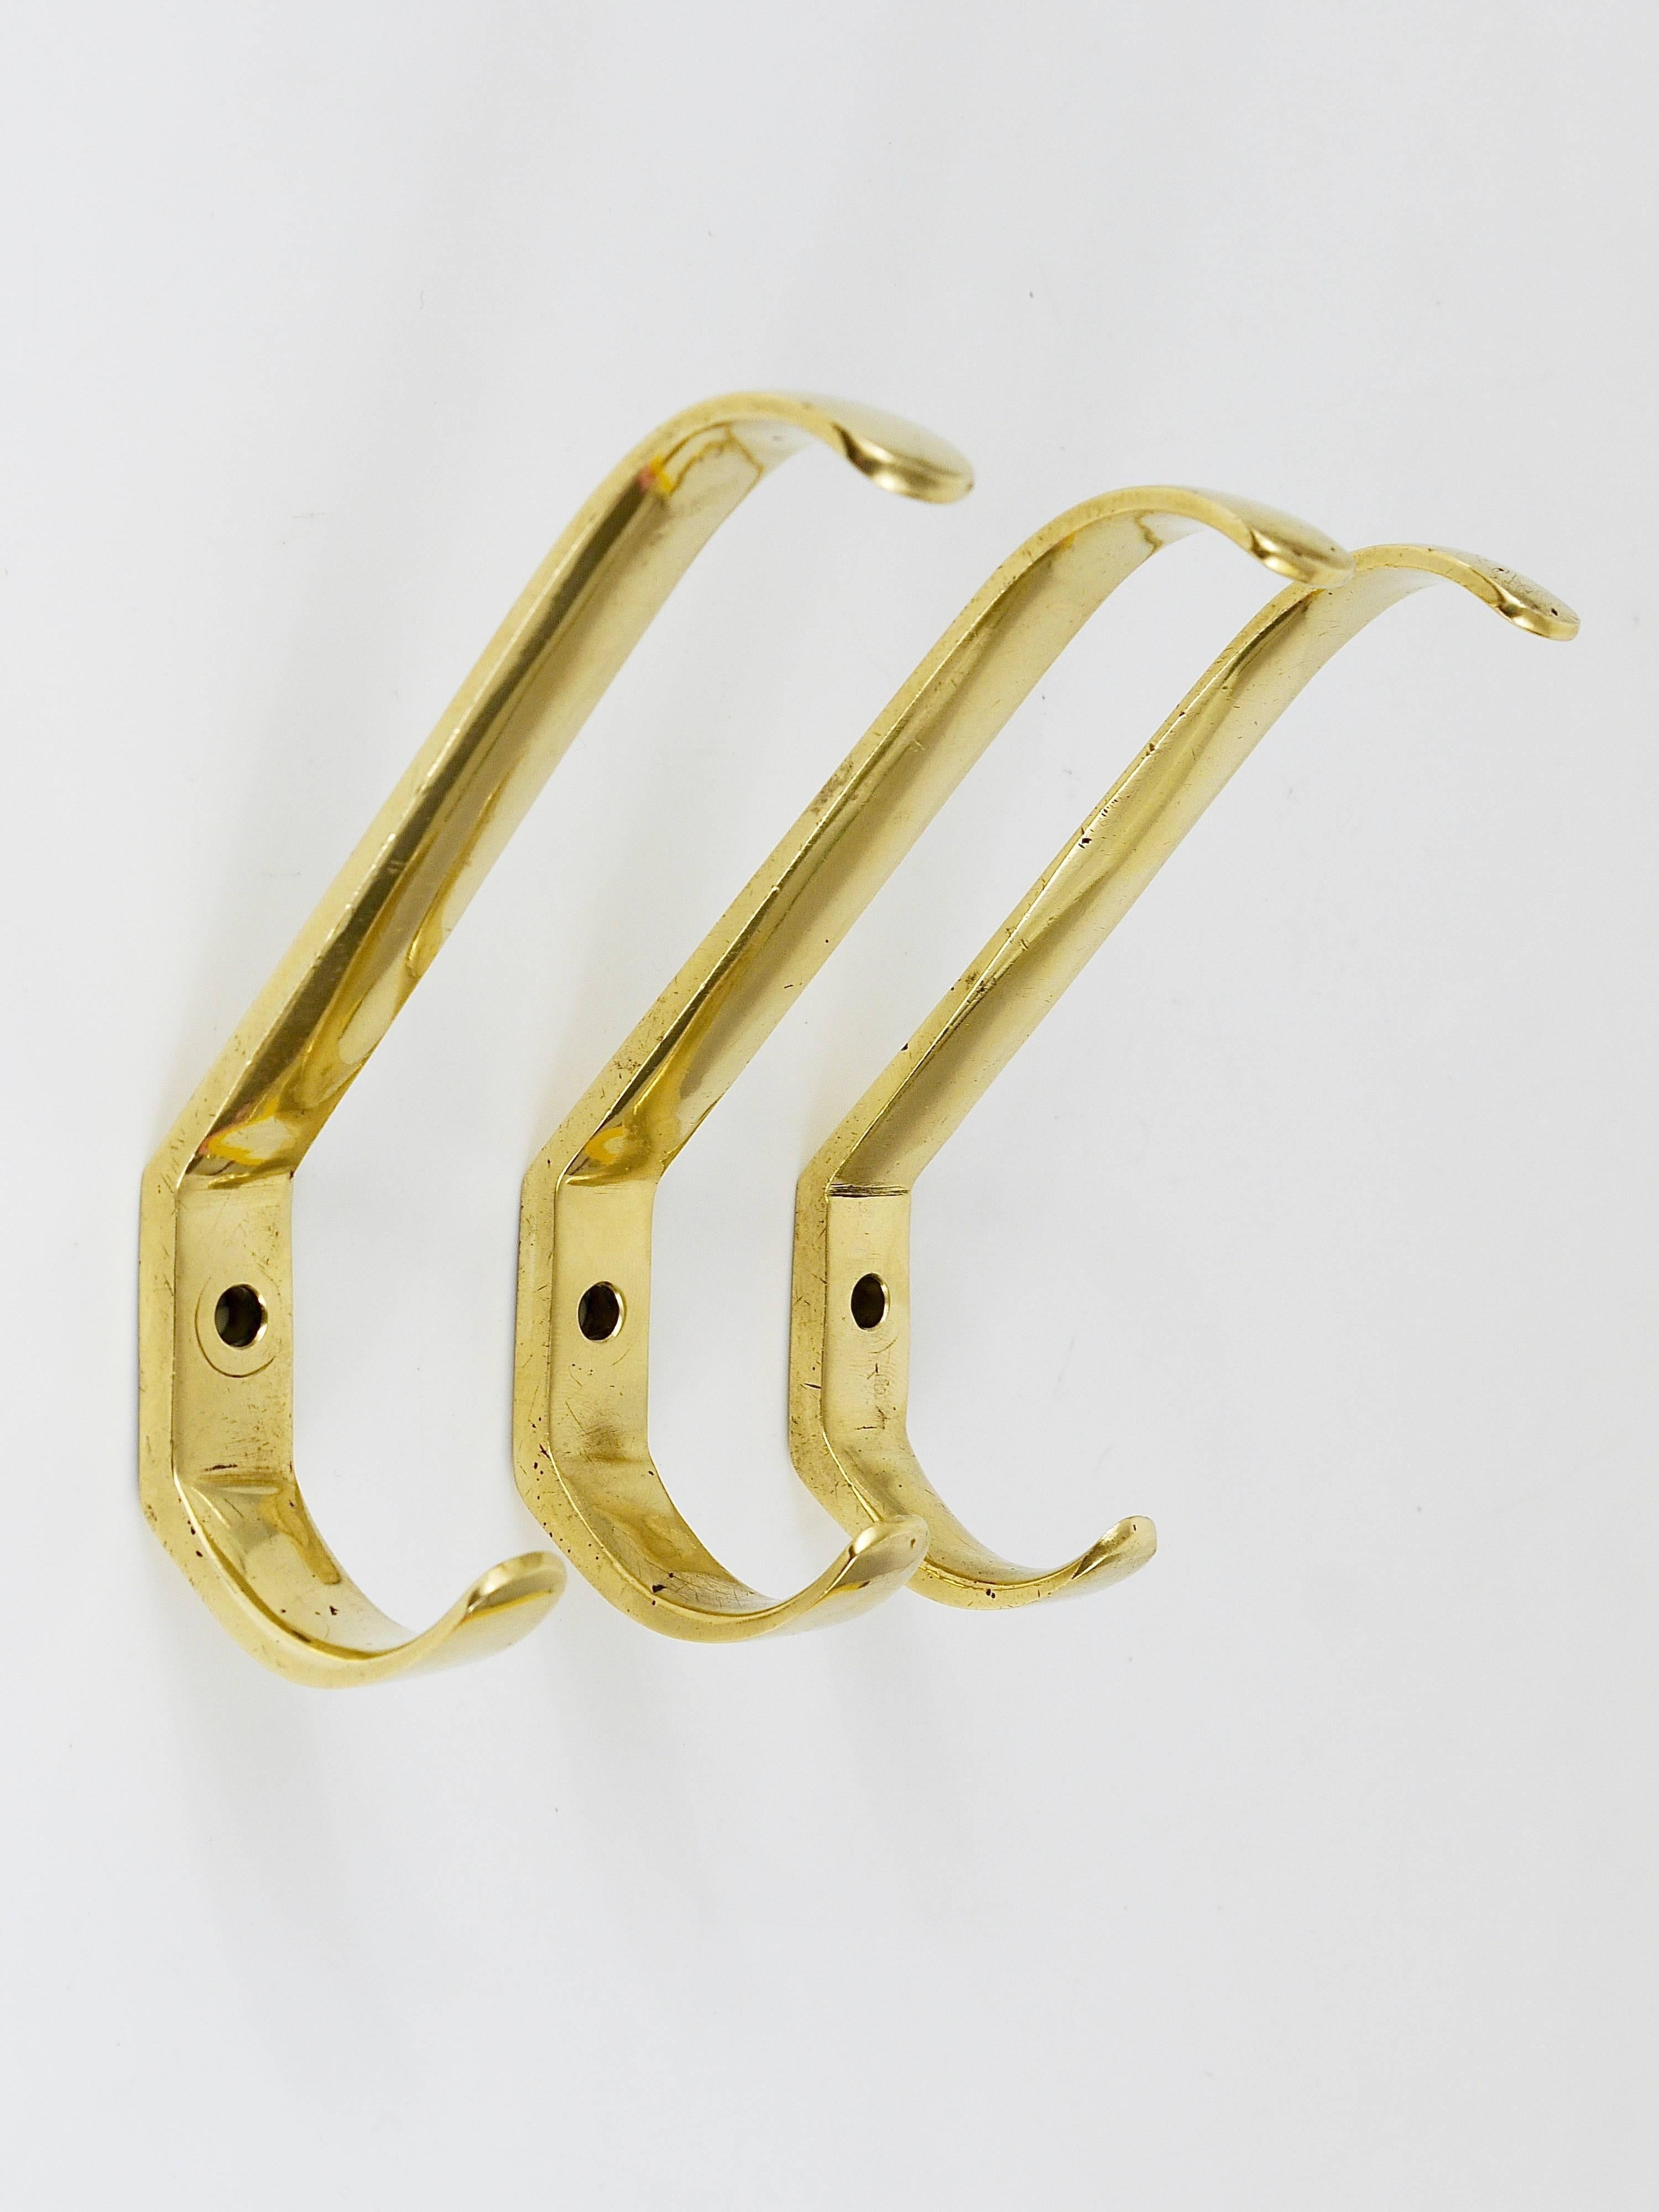 Three Midcentury Brass Wall Coat Hooks by Herta Baller Vienna Austria, 1950s For Sale 3